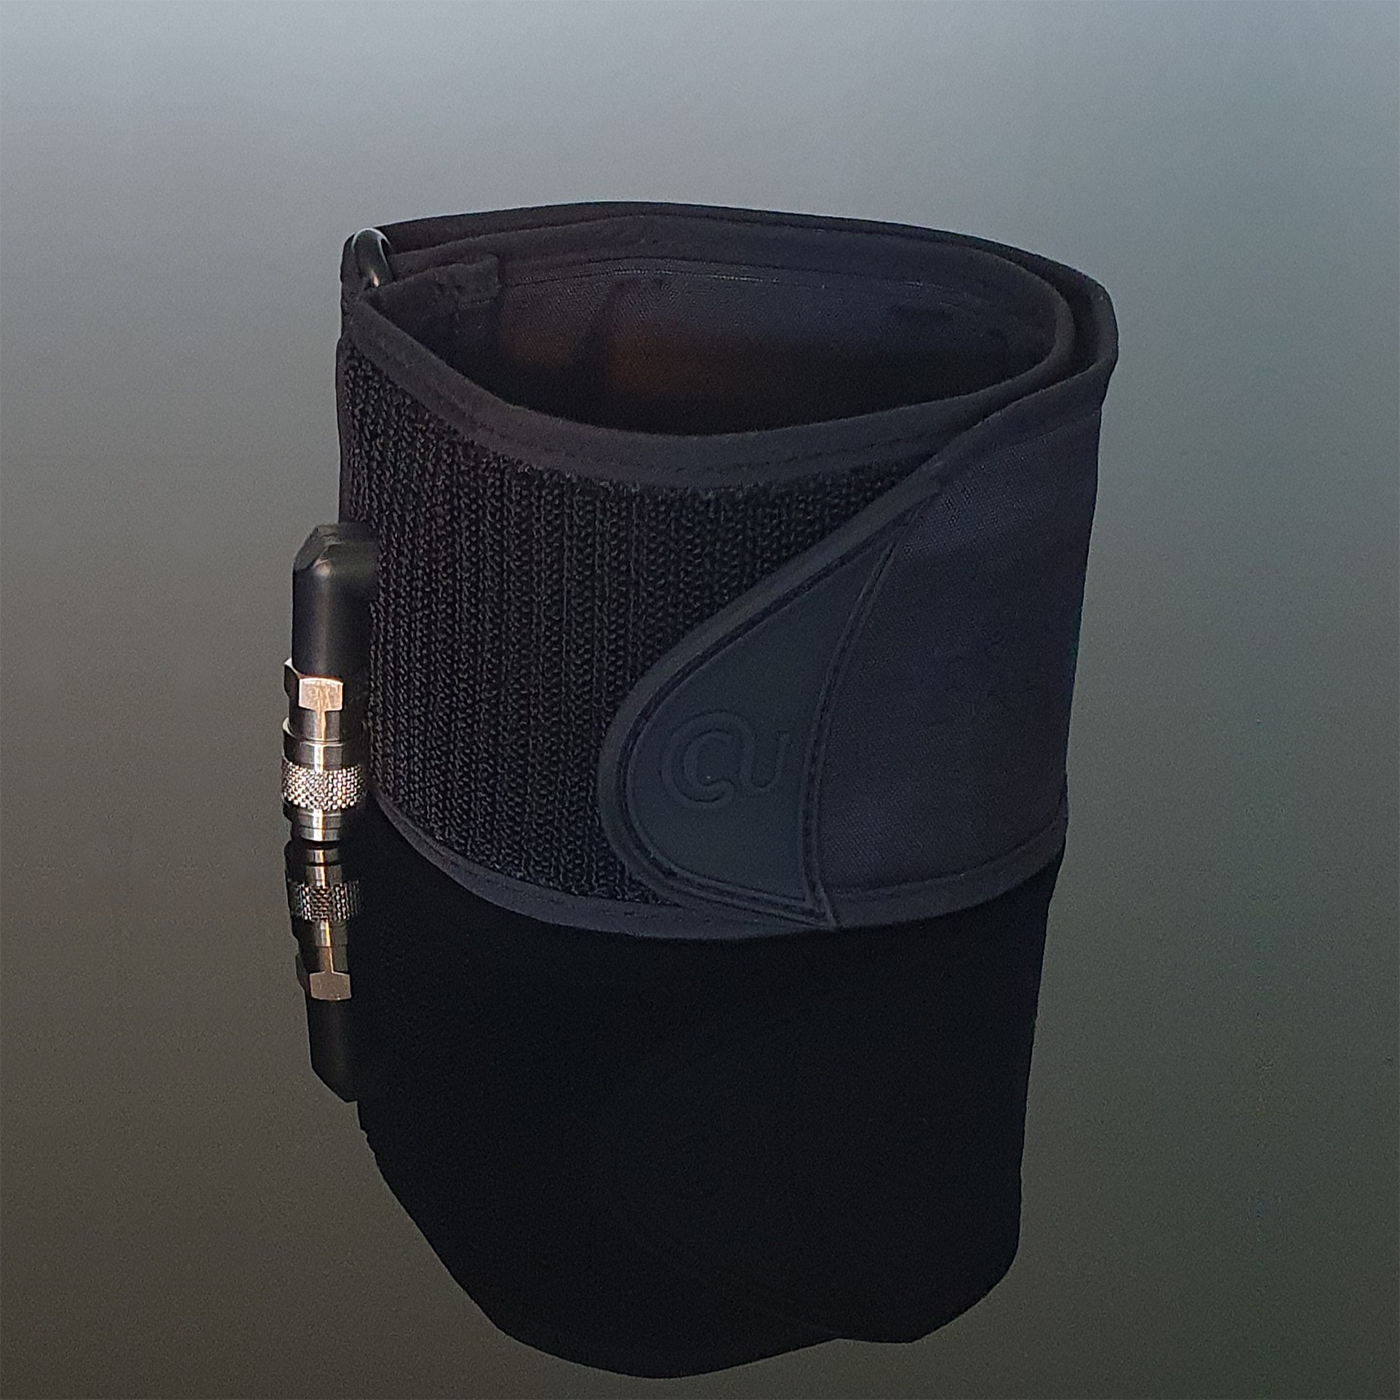 Se Fit Cuffs - Rehab Upper V3.1 - Wireless (Long + Short hose - Black hos Fitcuffs.com